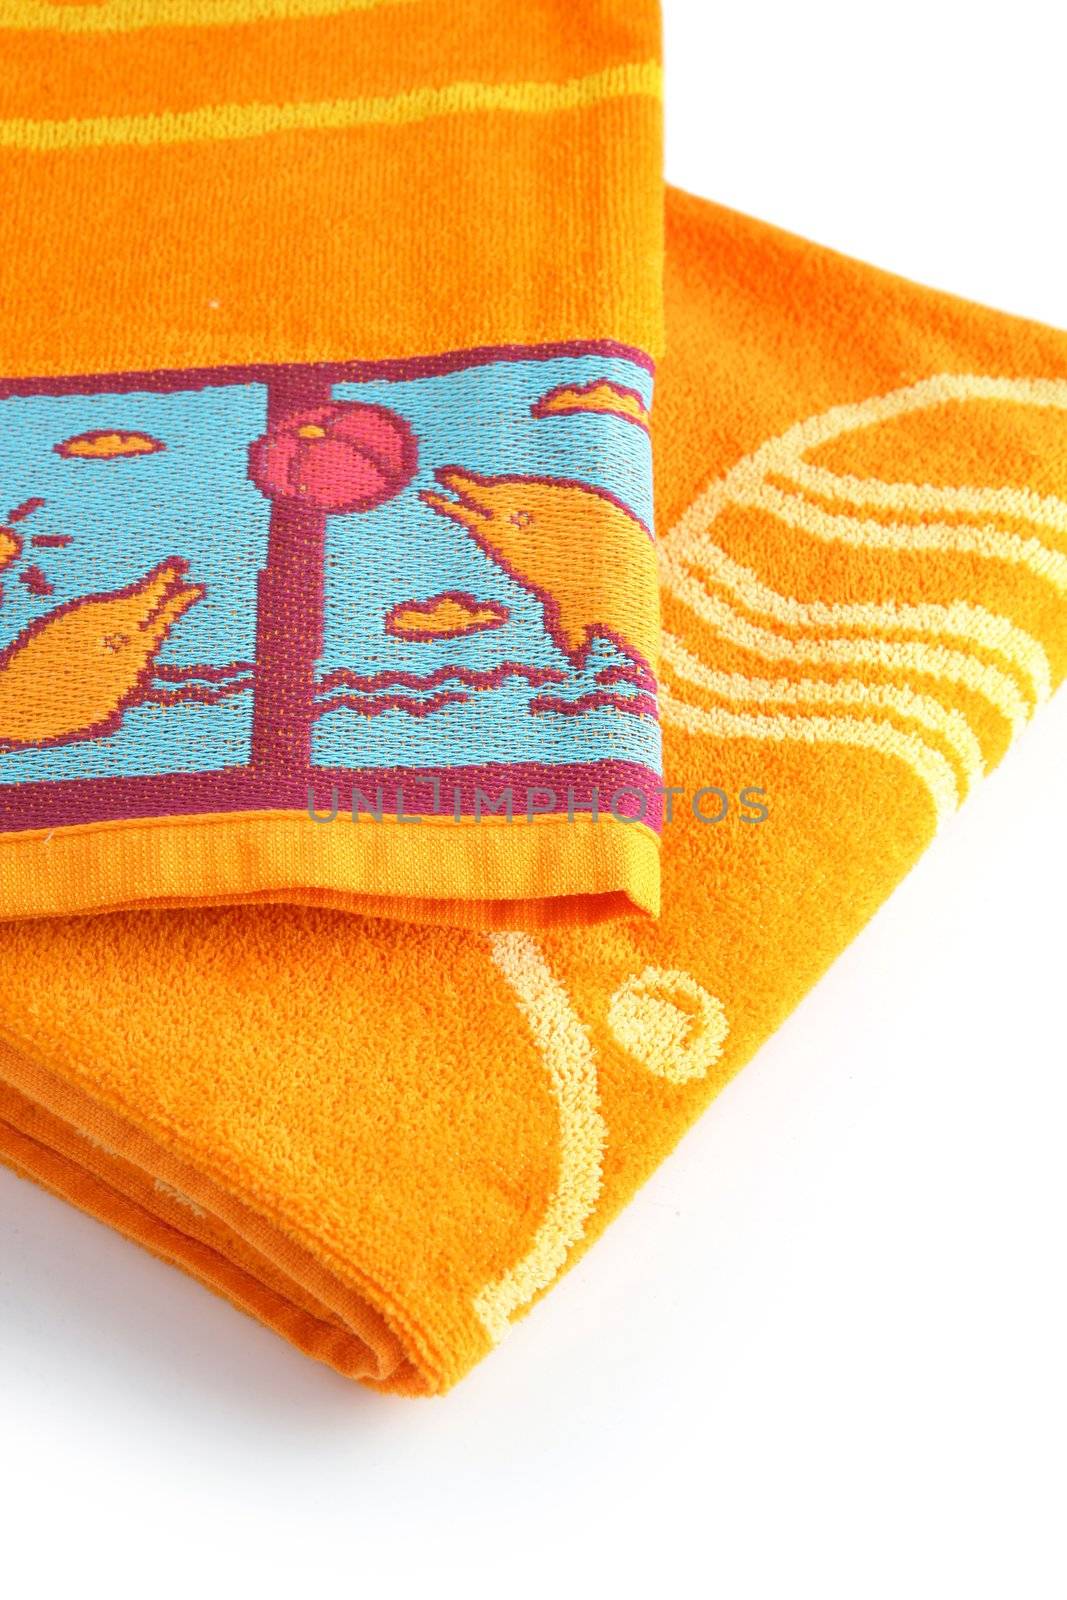 Child's beach towel